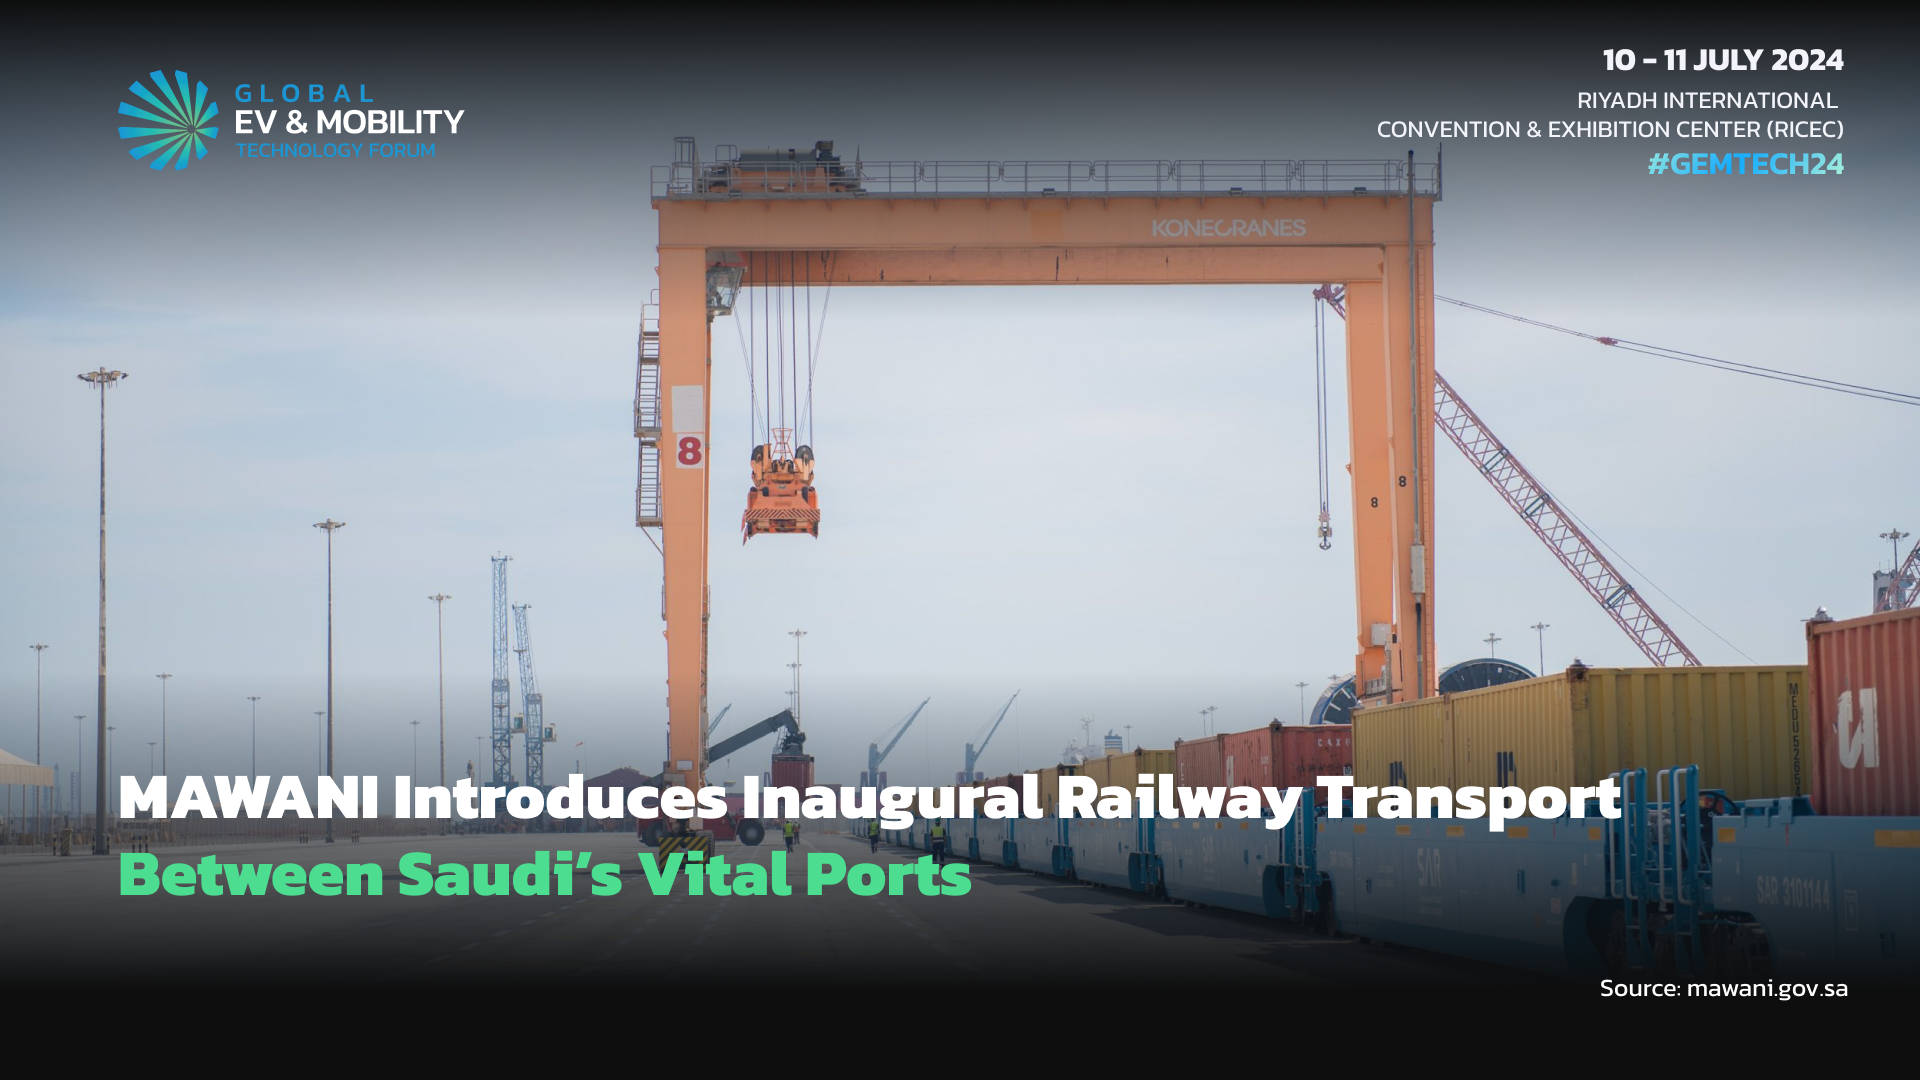 MAWANI Introduces Inaugural Railway Transport Between Saudi’s Vital Ports